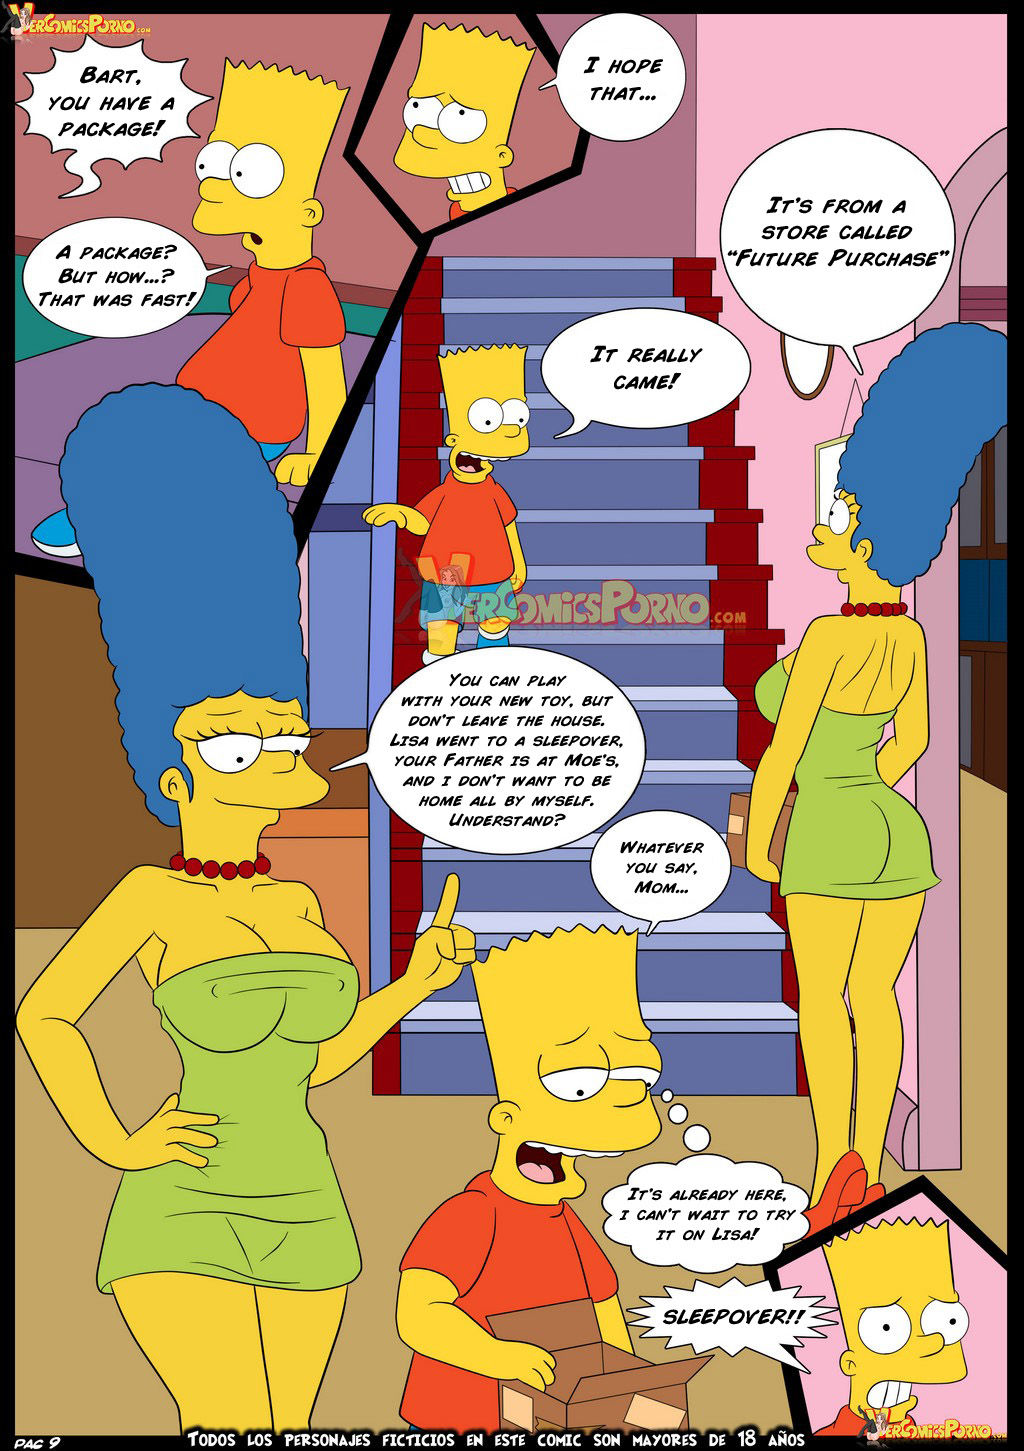 [CROC] The Simpsons / Futurama - Future purchase page 10